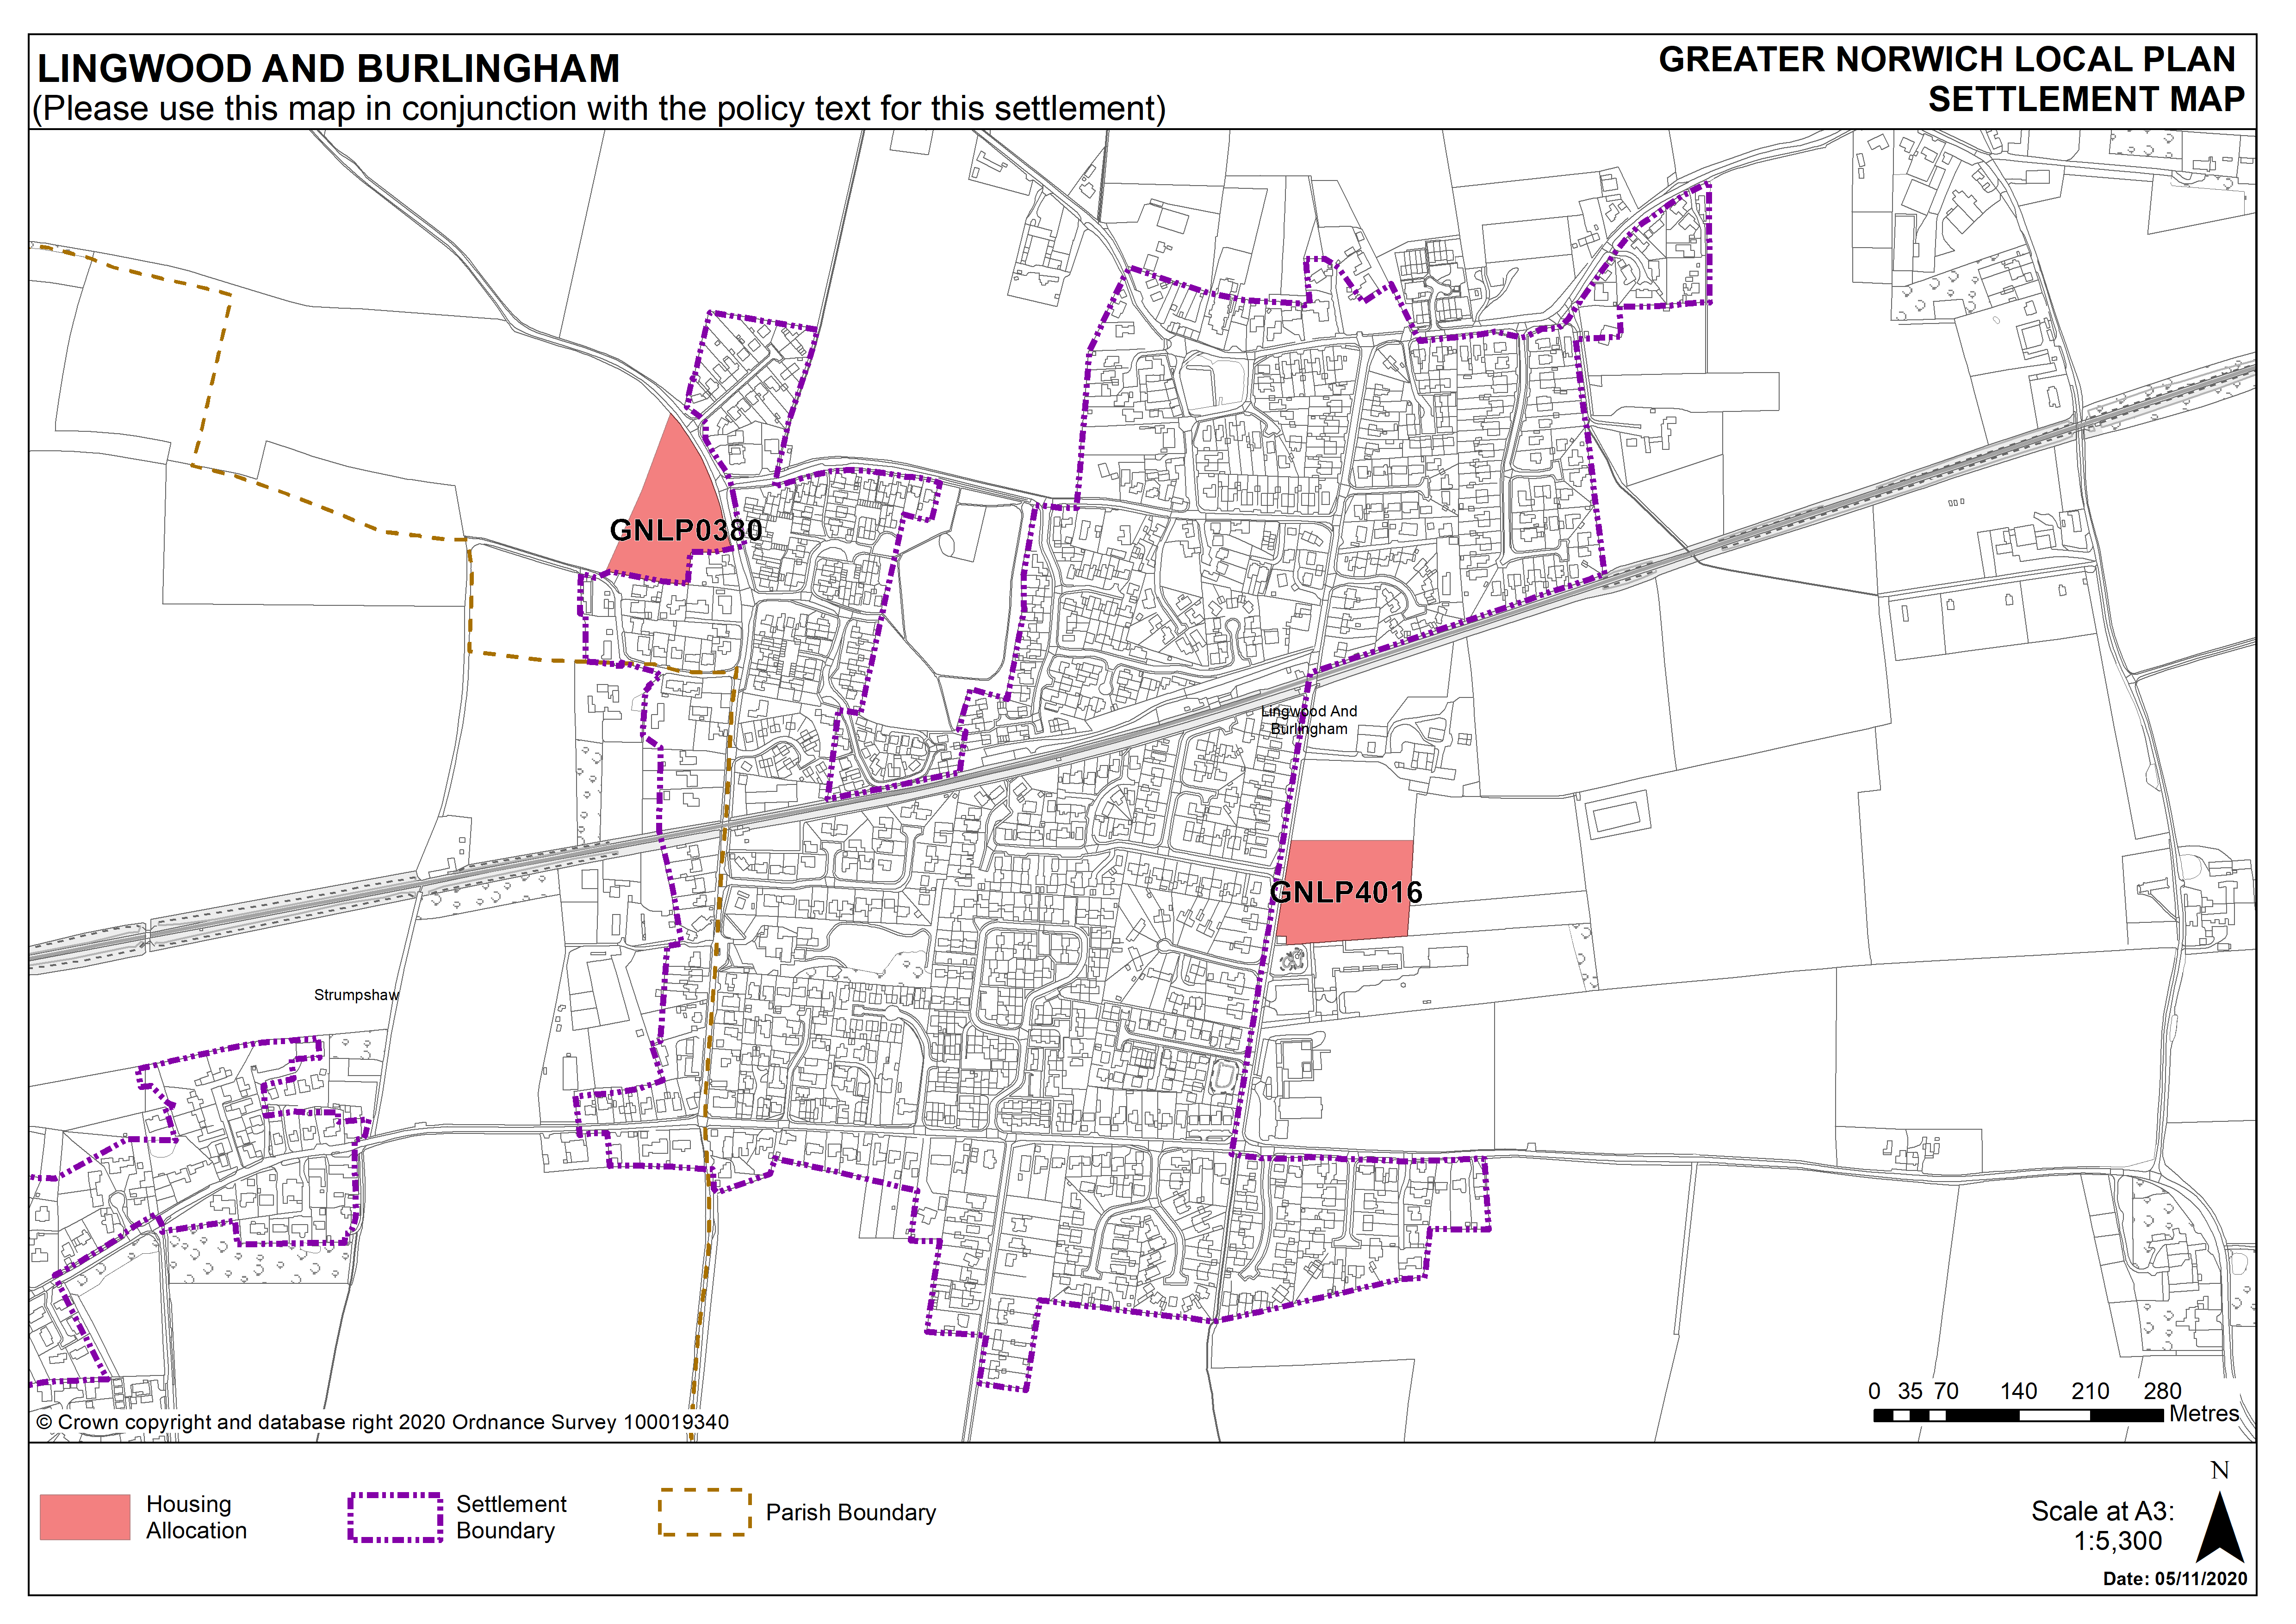 Lingwood and Burlingham Settlement Map